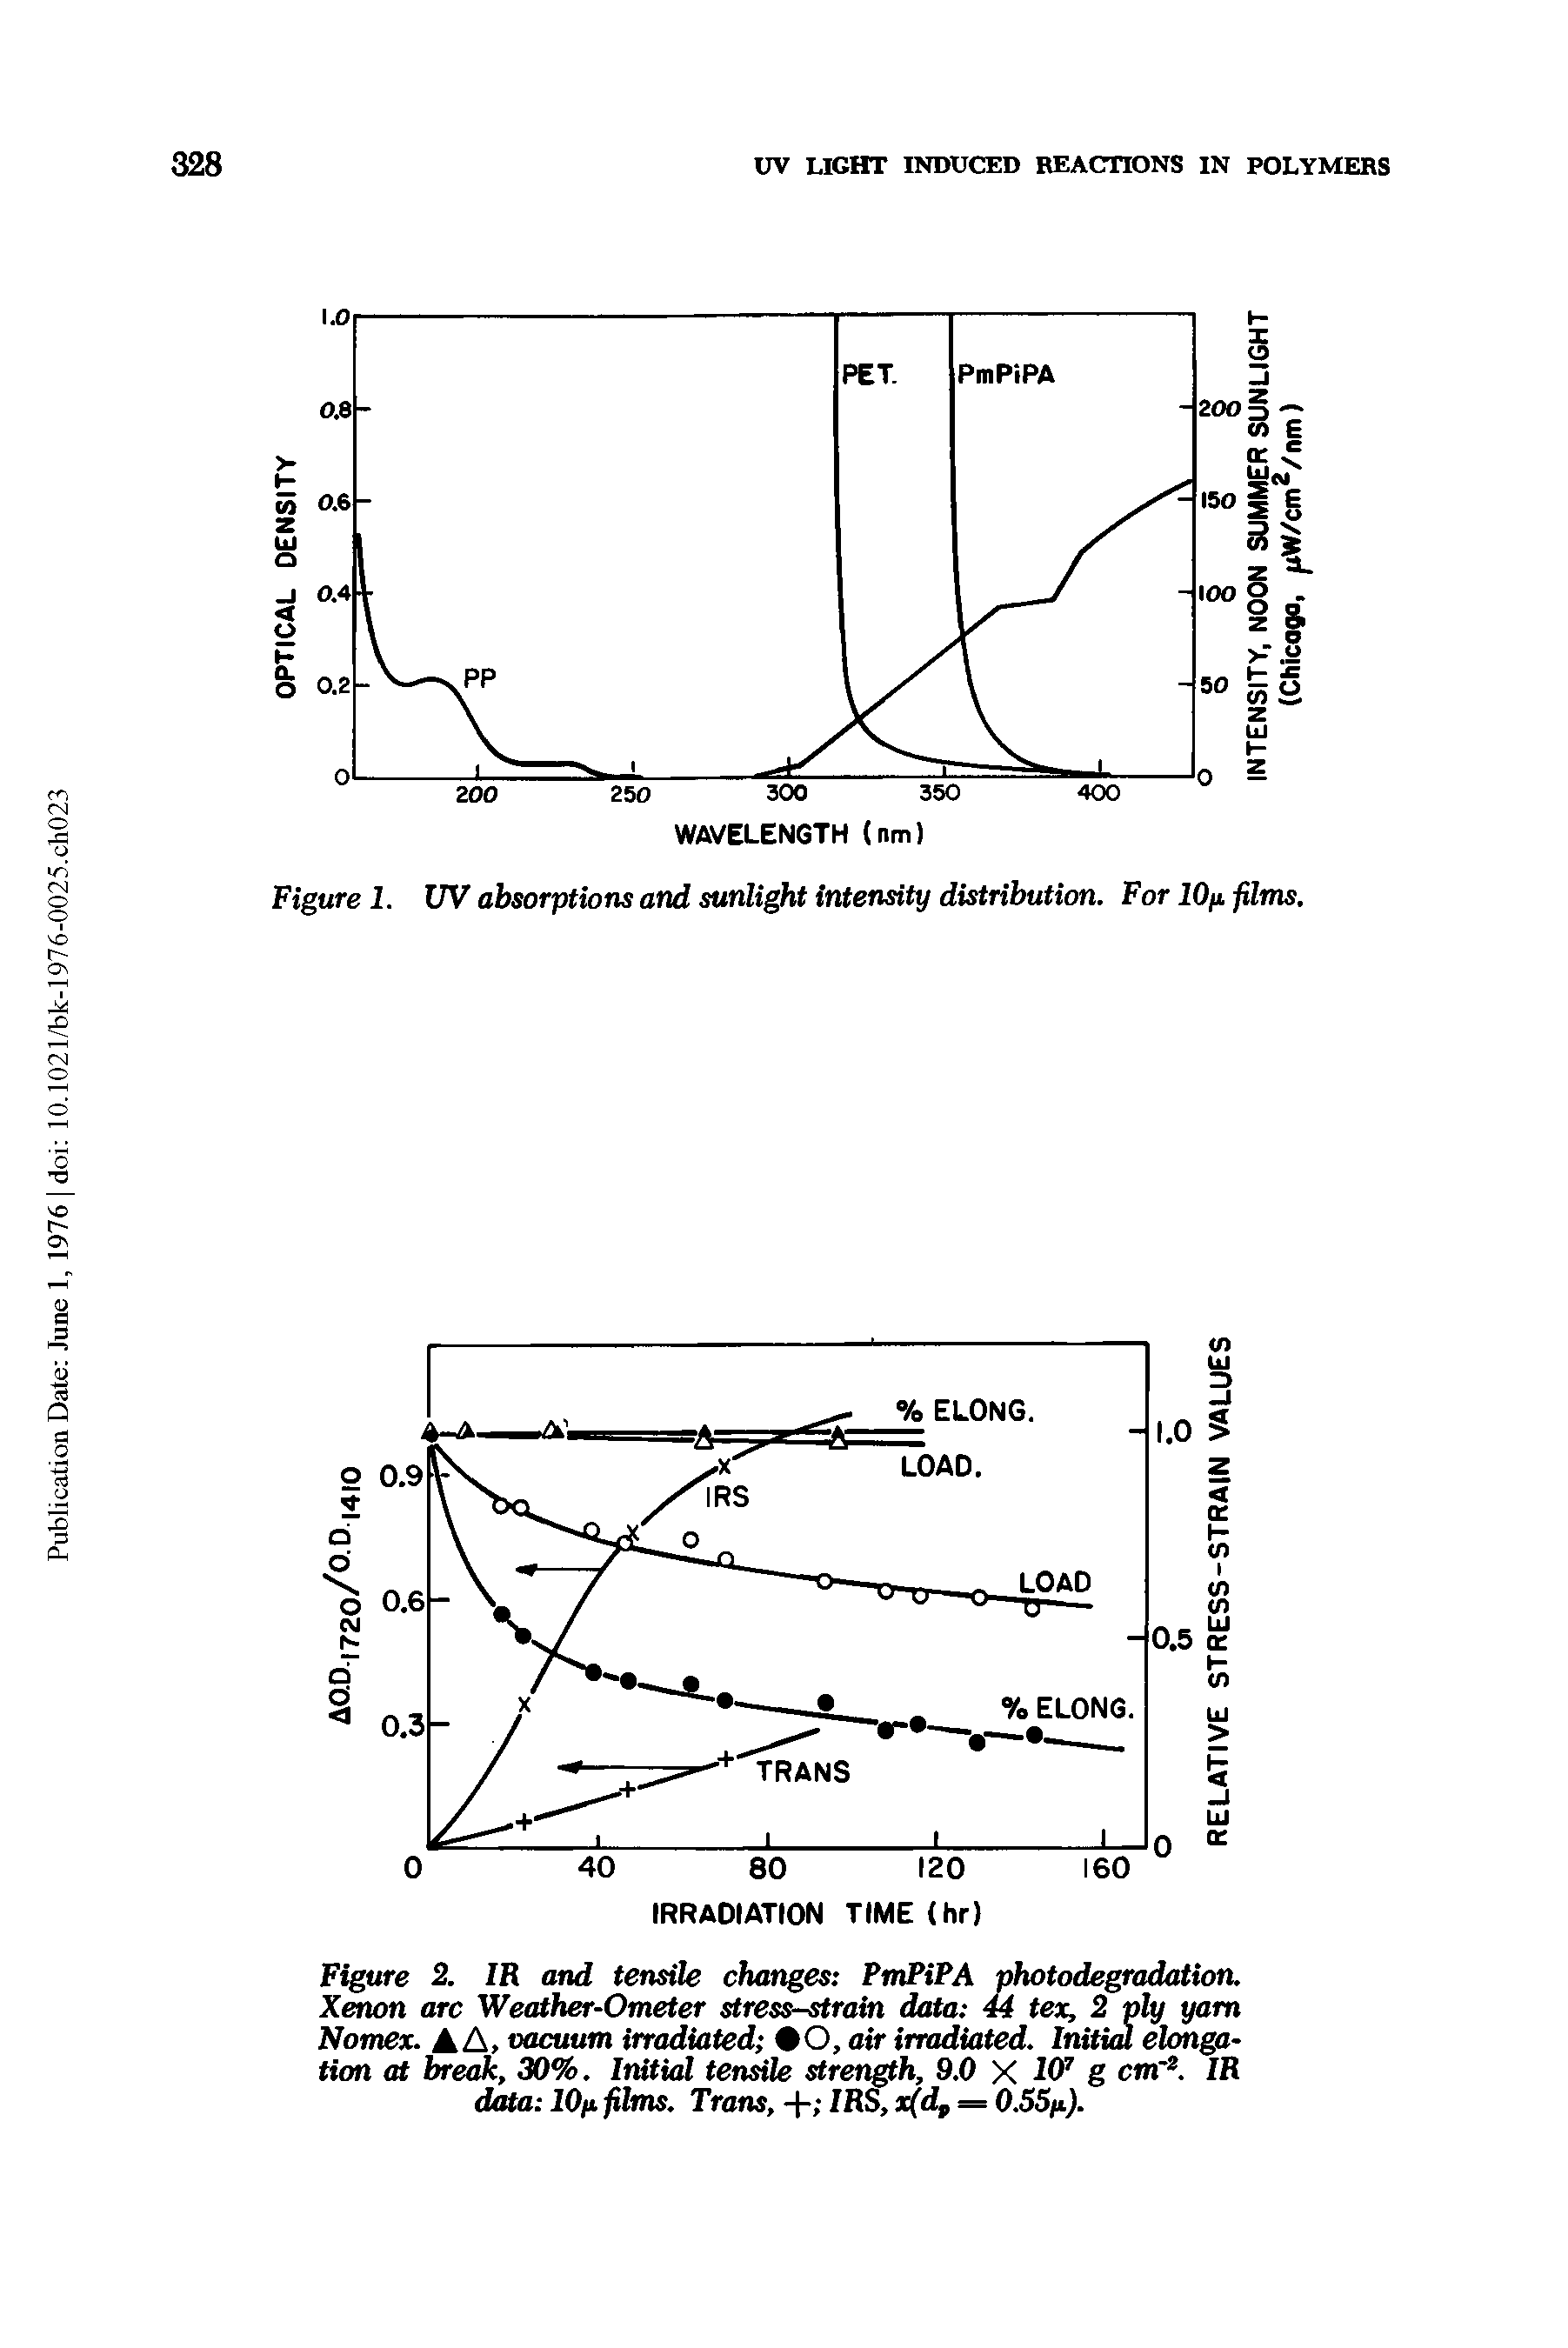 Figure 1. UV absorptions and sunlight intensity distribution. For lOfi films.